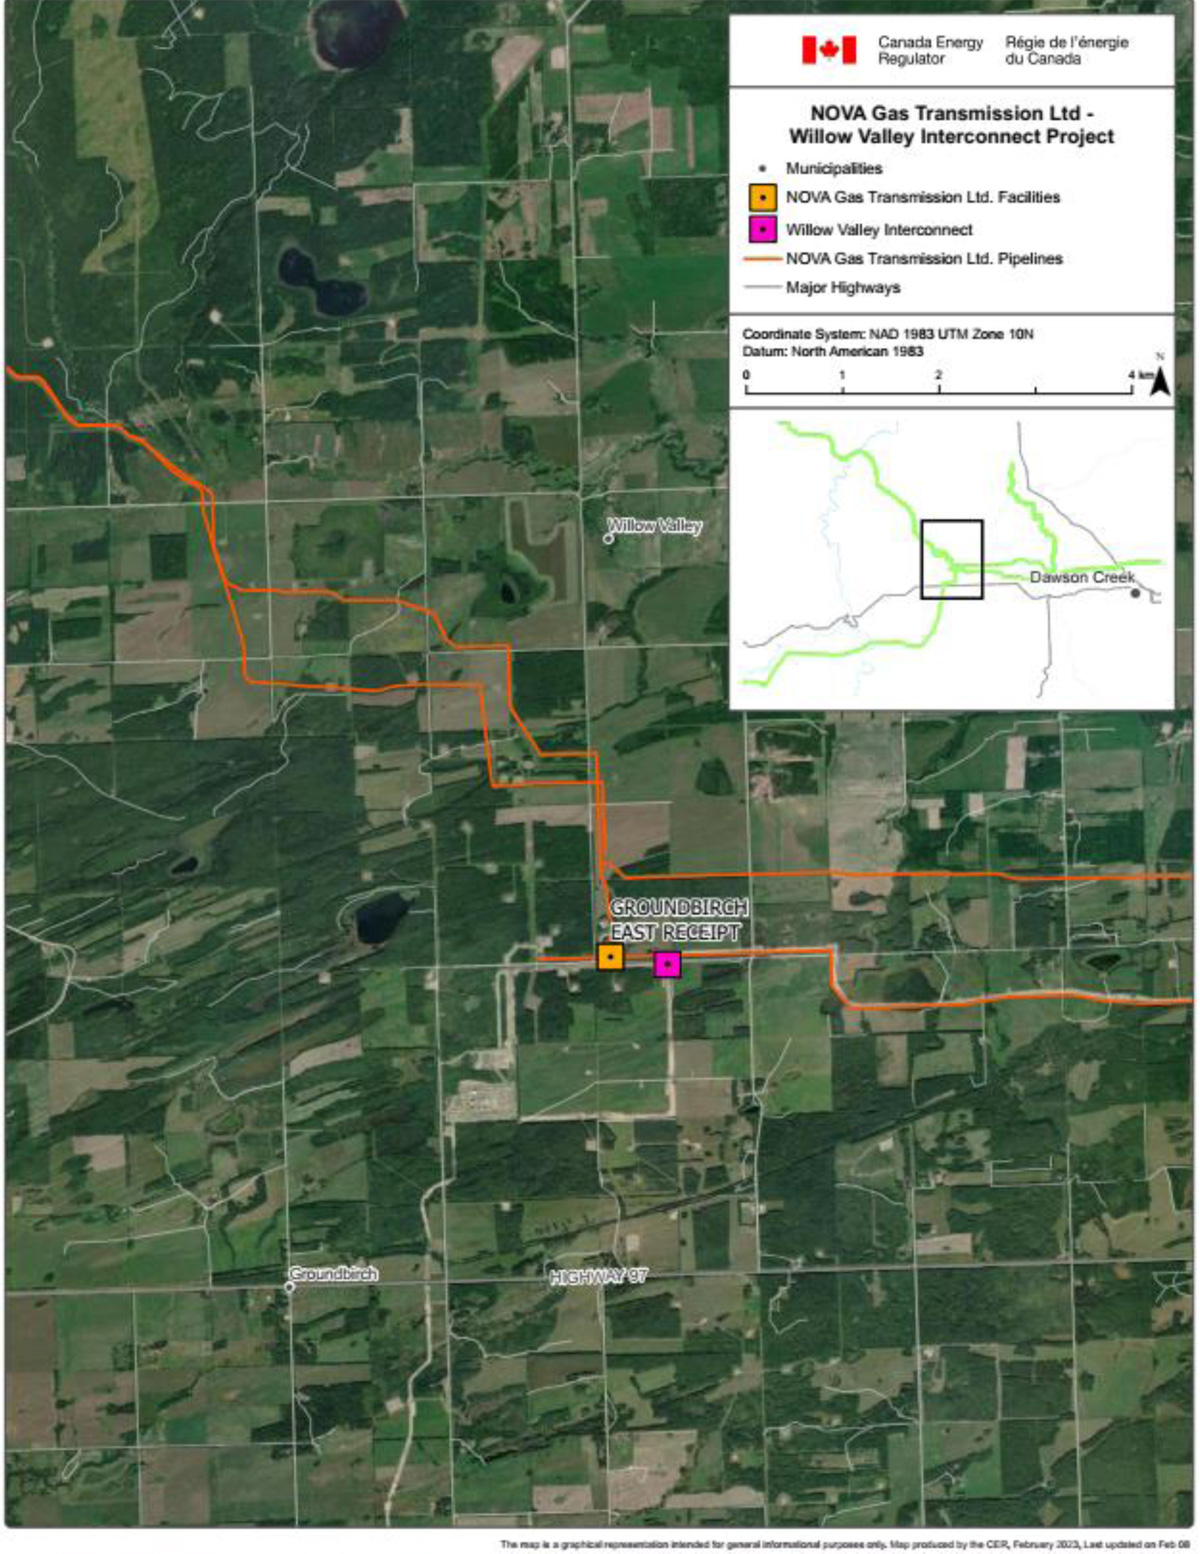 NOVA Gas Transmission Ltd. – Willow Valley Interconnect map